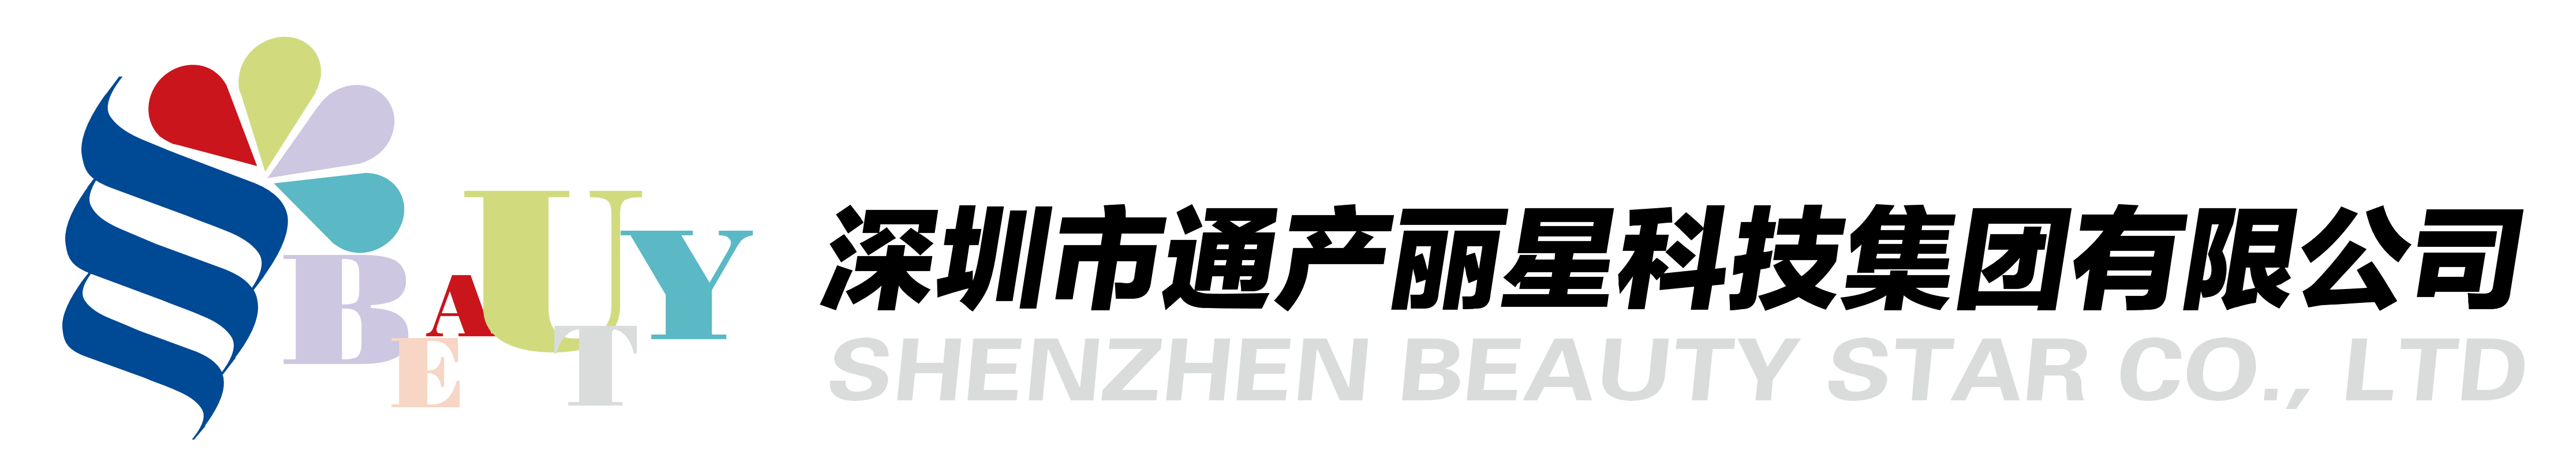 logo_通产丽星科技集团.png